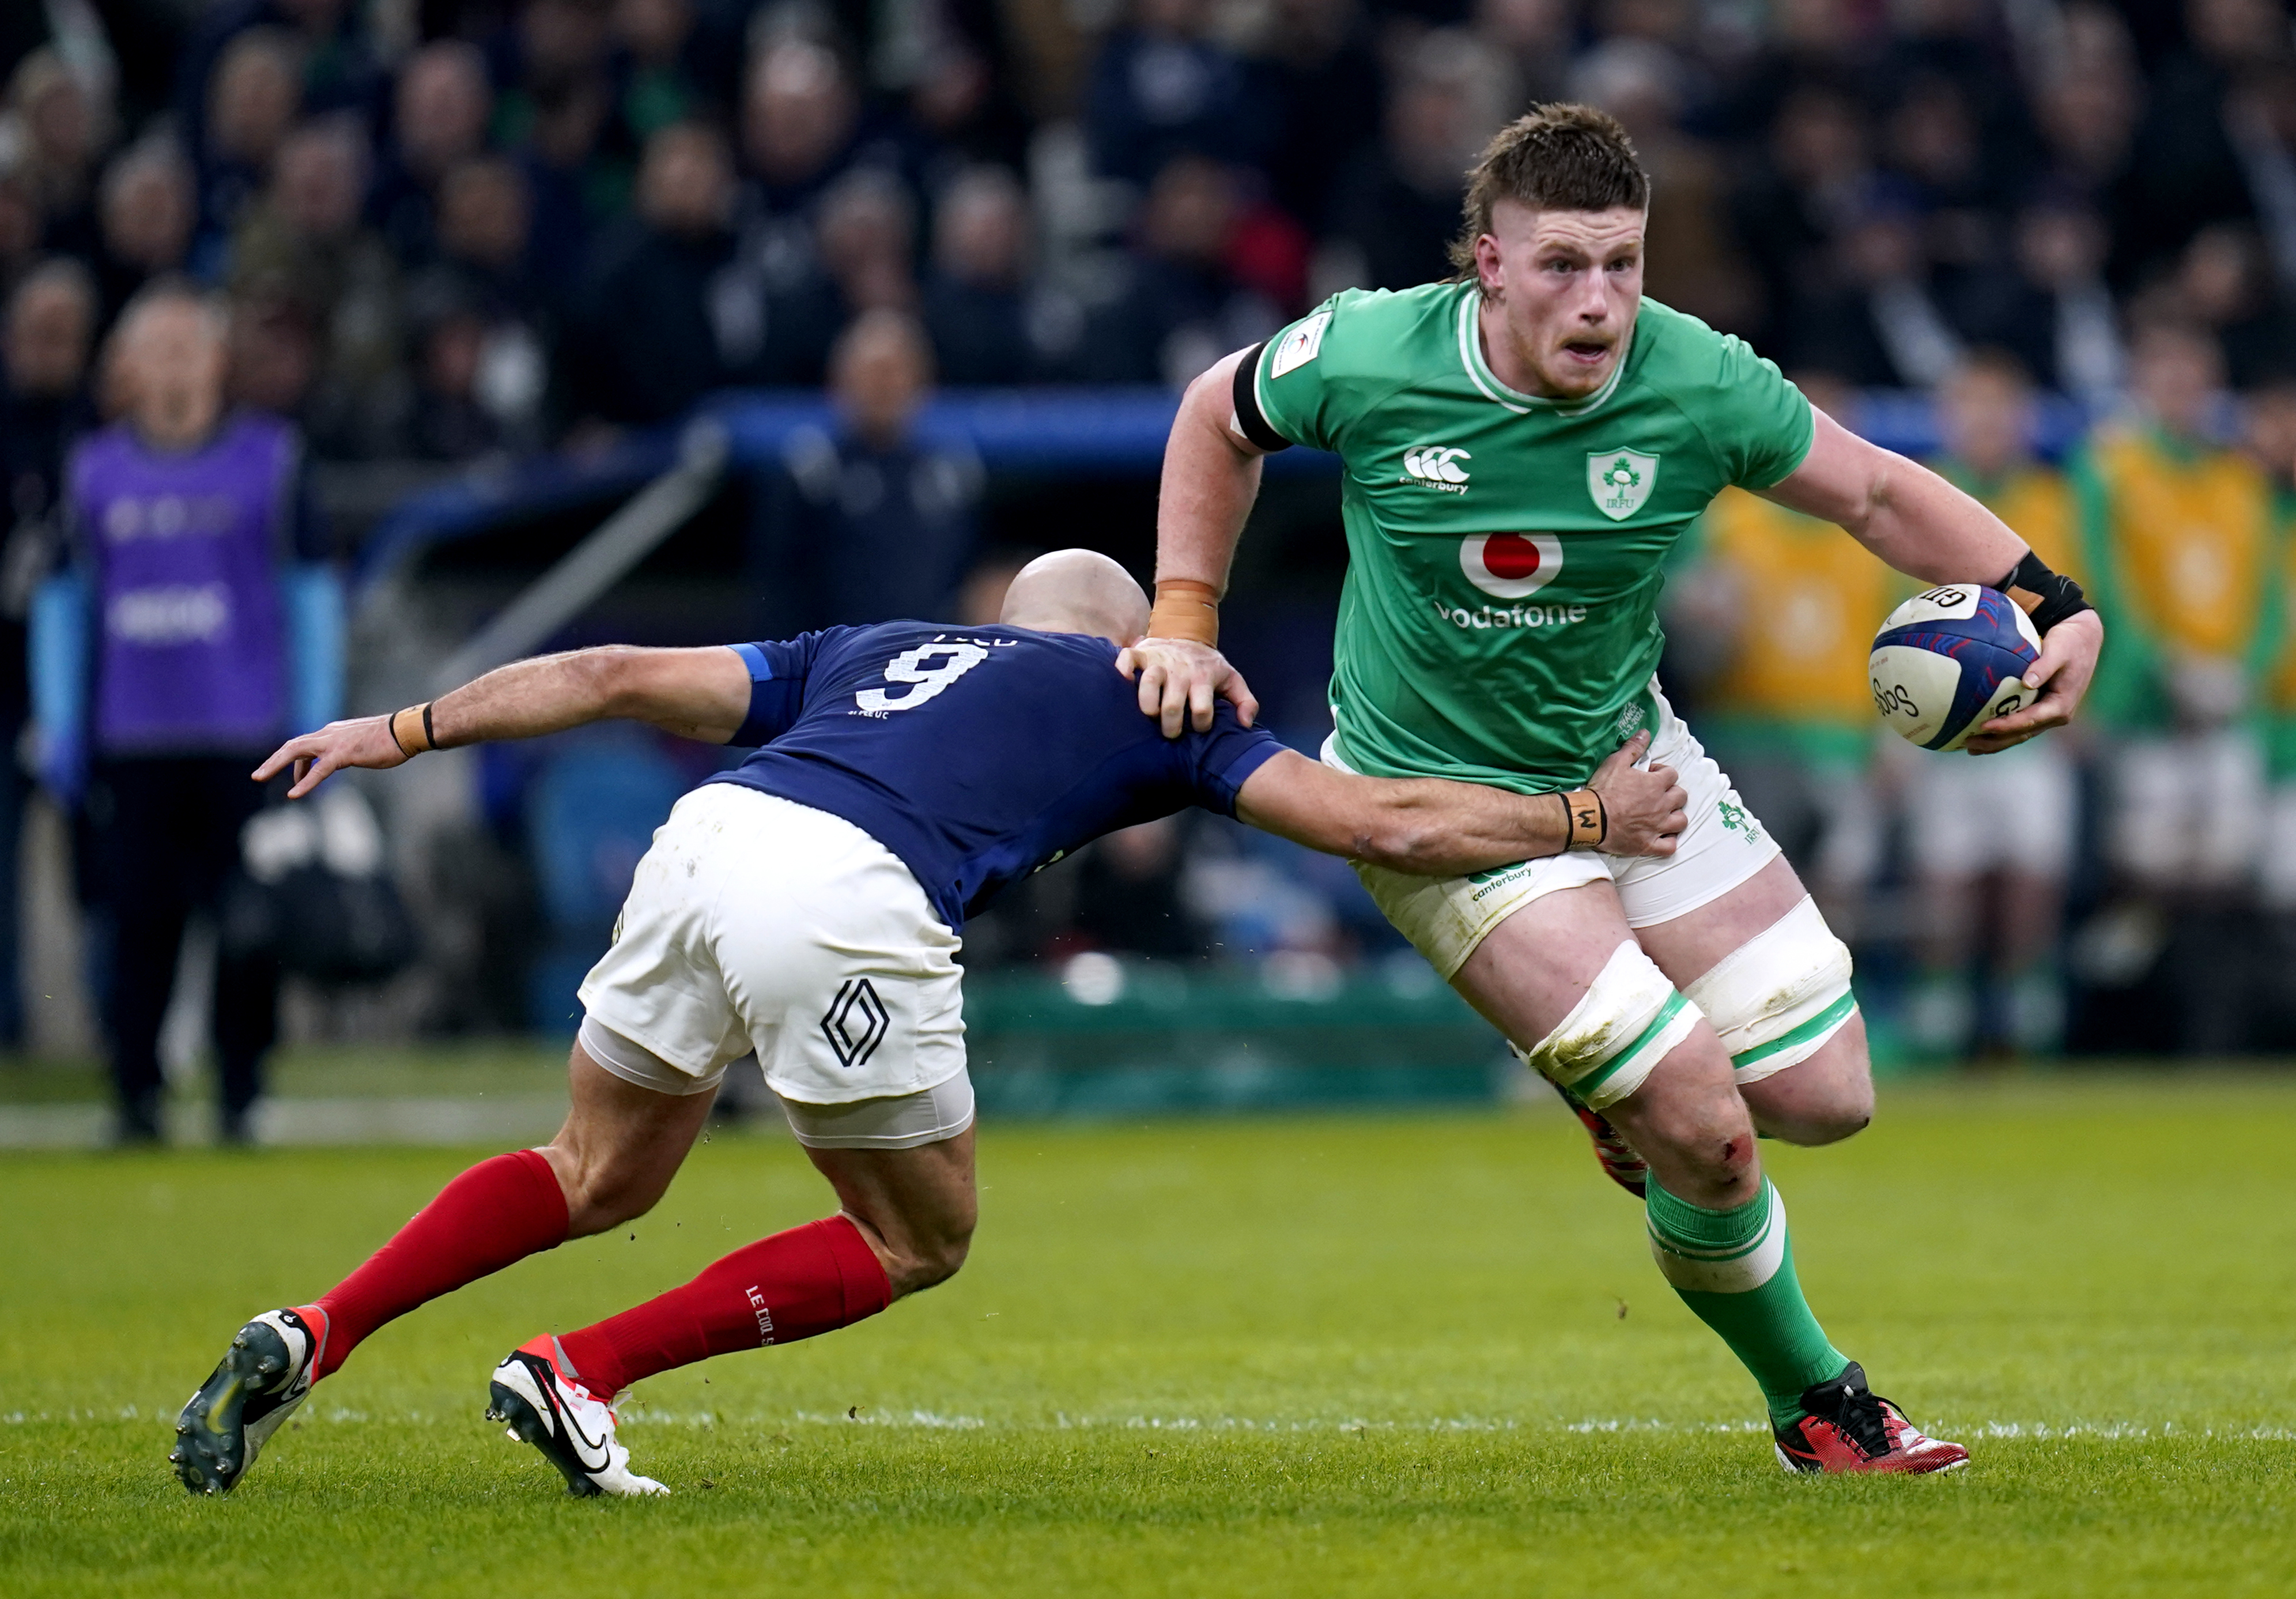 Ireland's Joe McCarthy dodges a tackle